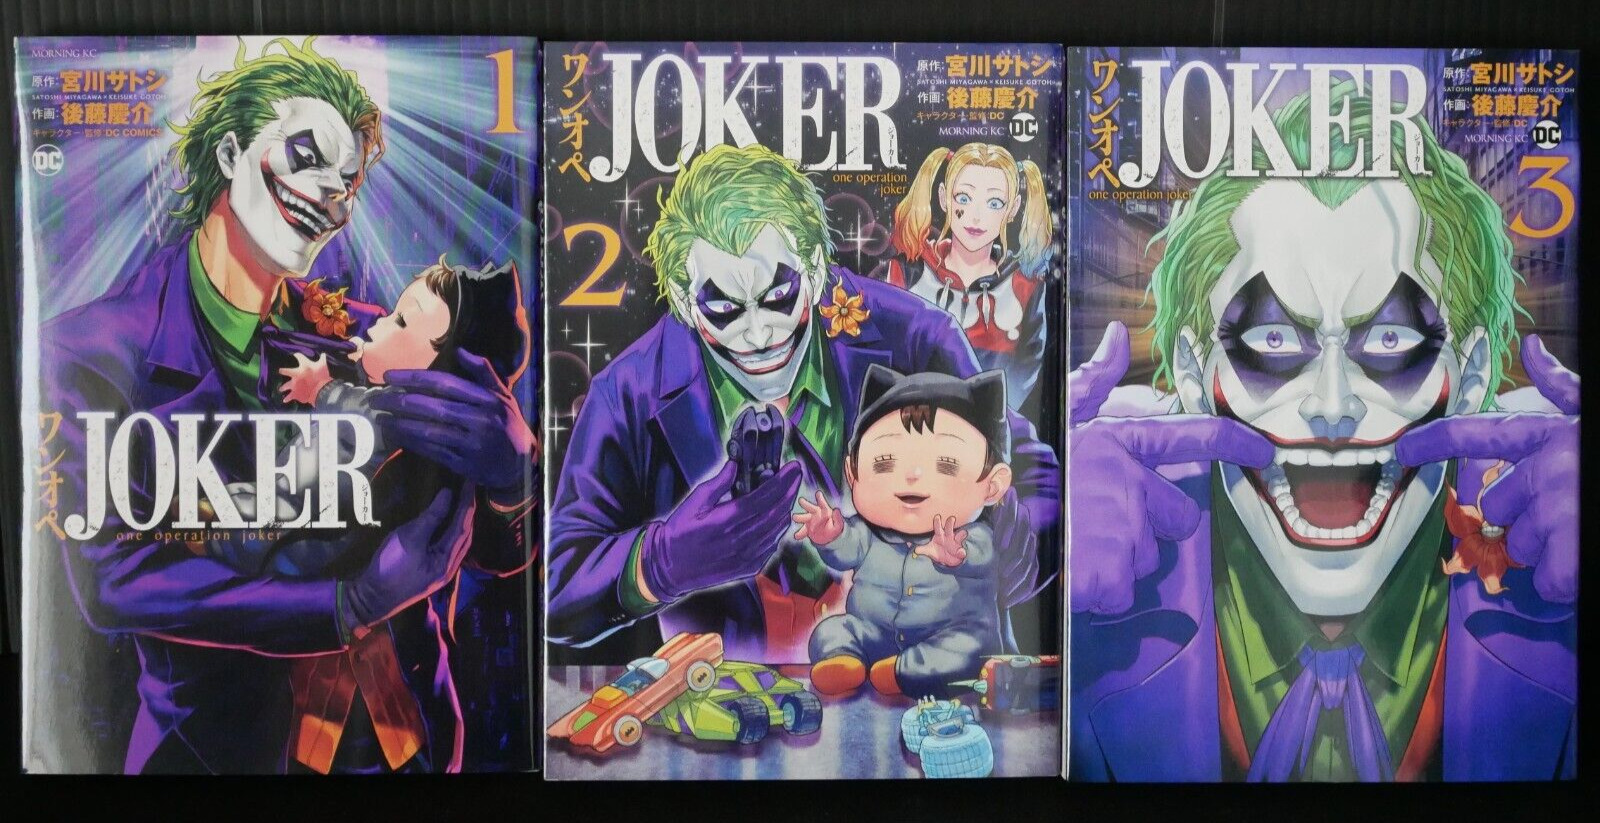 SHOHAN: One Operation (One-person operation) Joker Vol.1-3 Manga Complete Set